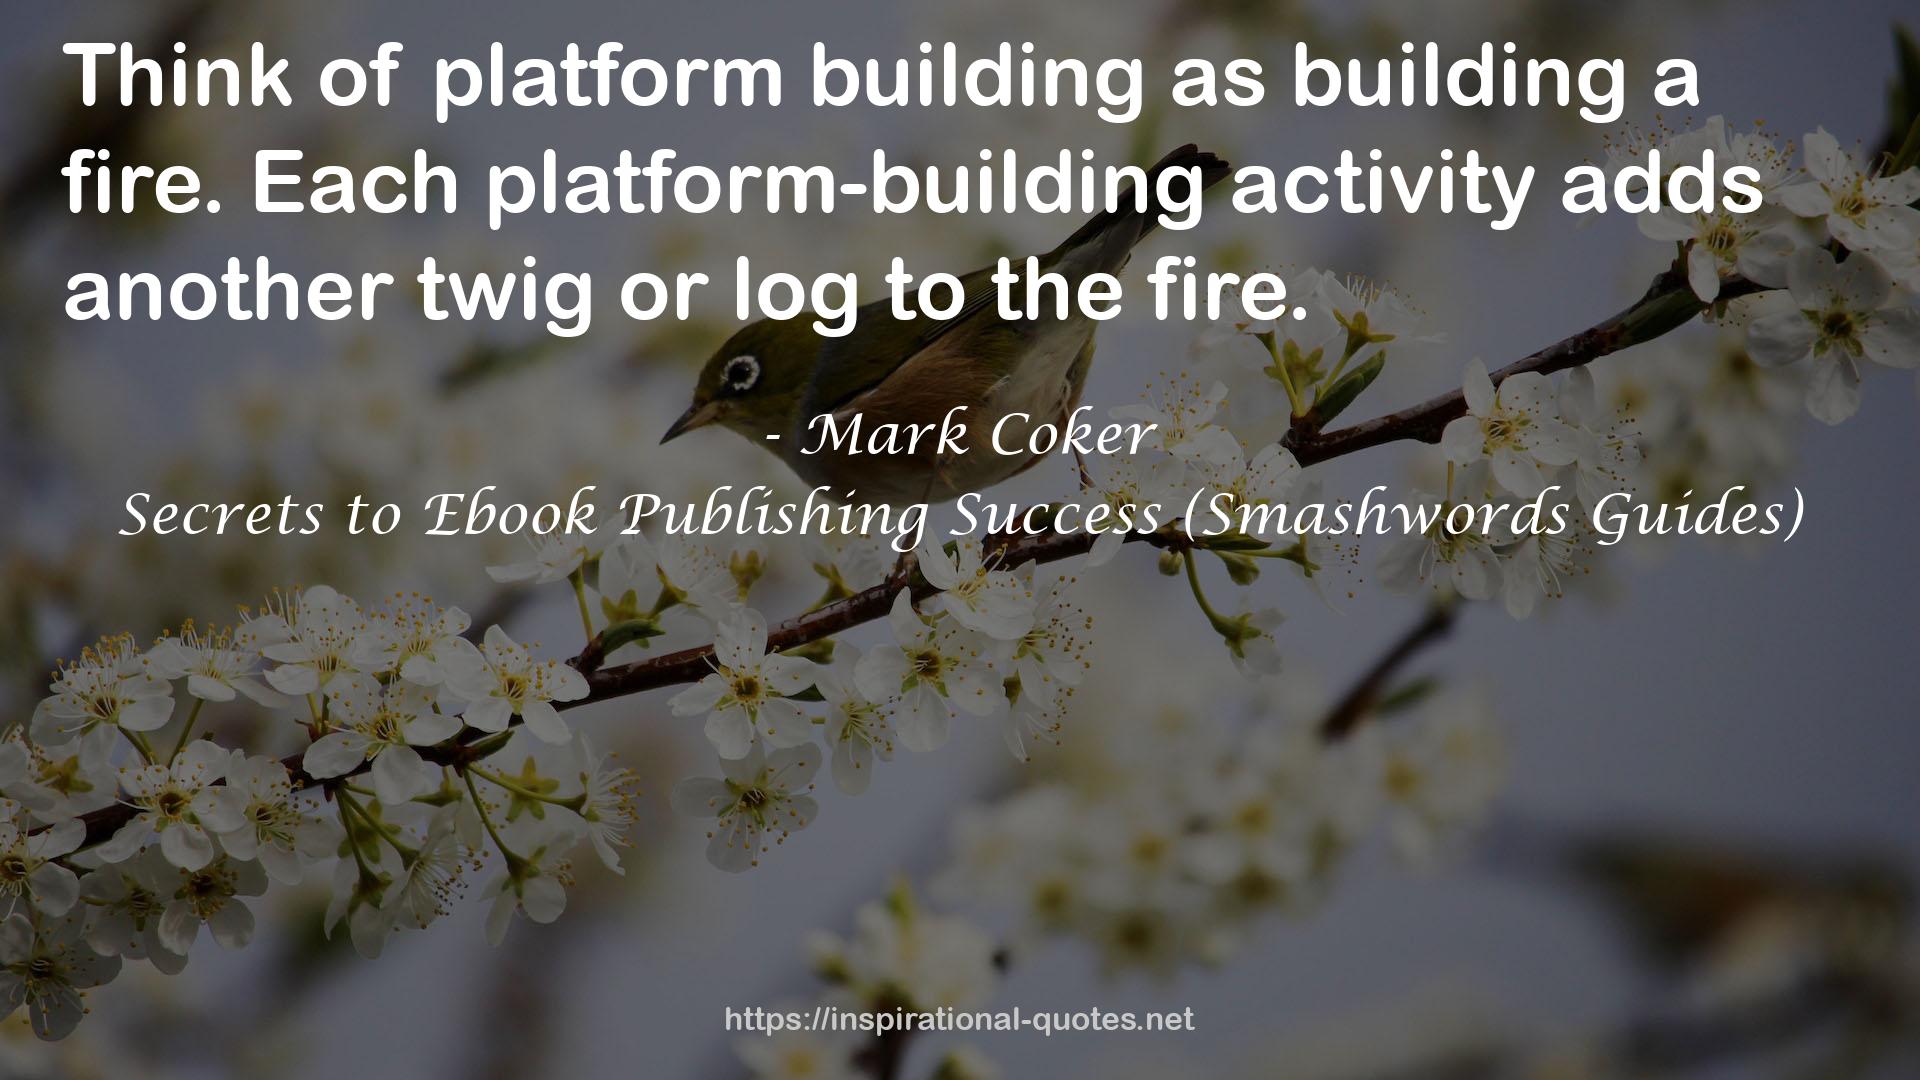 Secrets to Ebook Publishing Success (Smashwords Guides) QUOTES